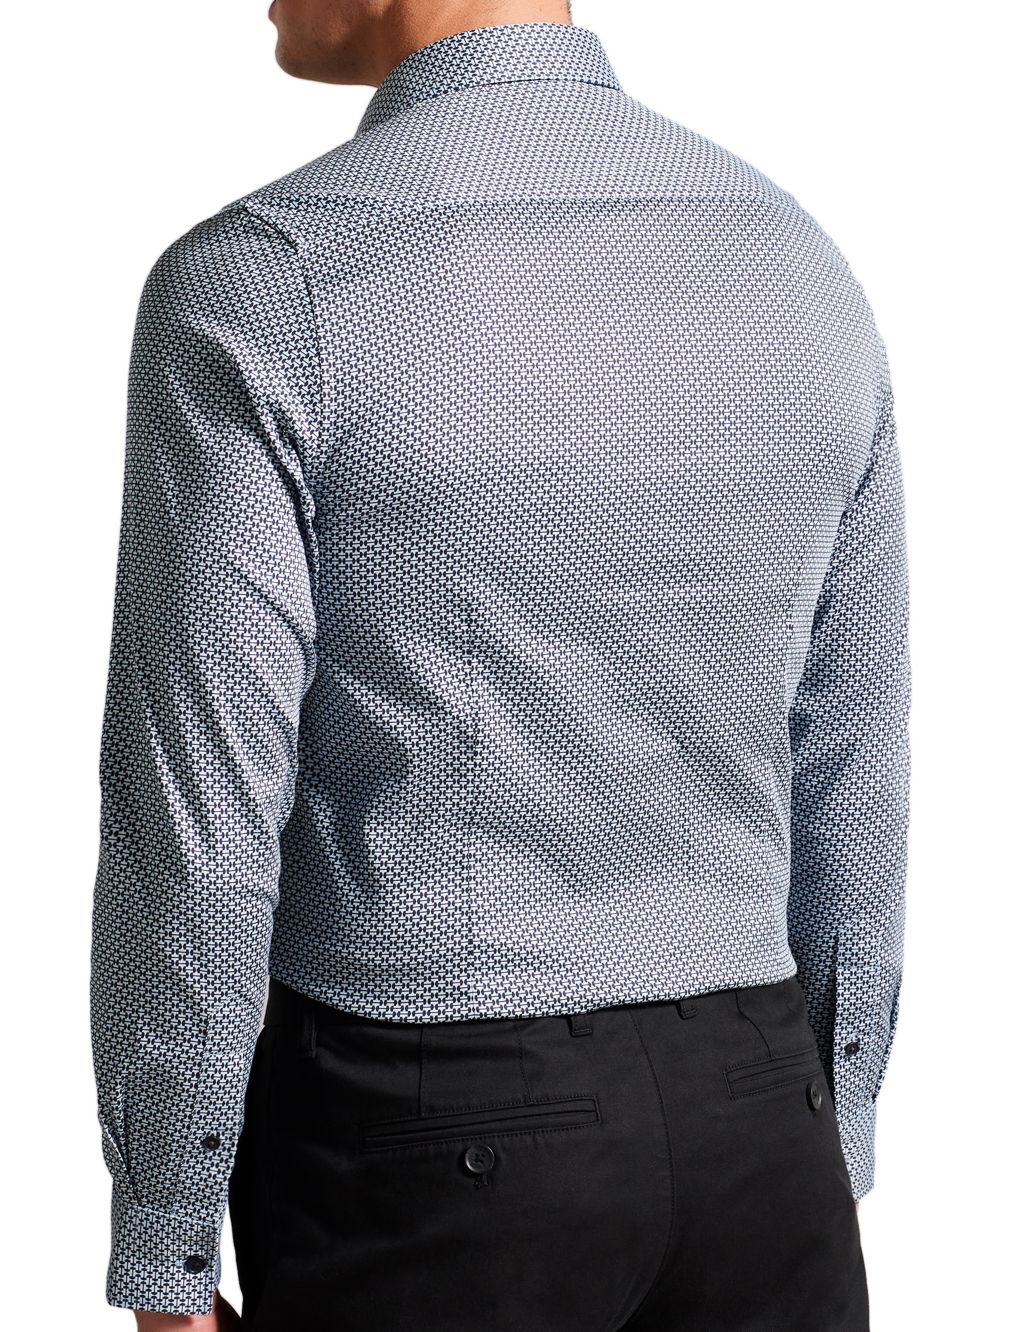 Slim Fit Cotton Rich Geometric Shirt image 4